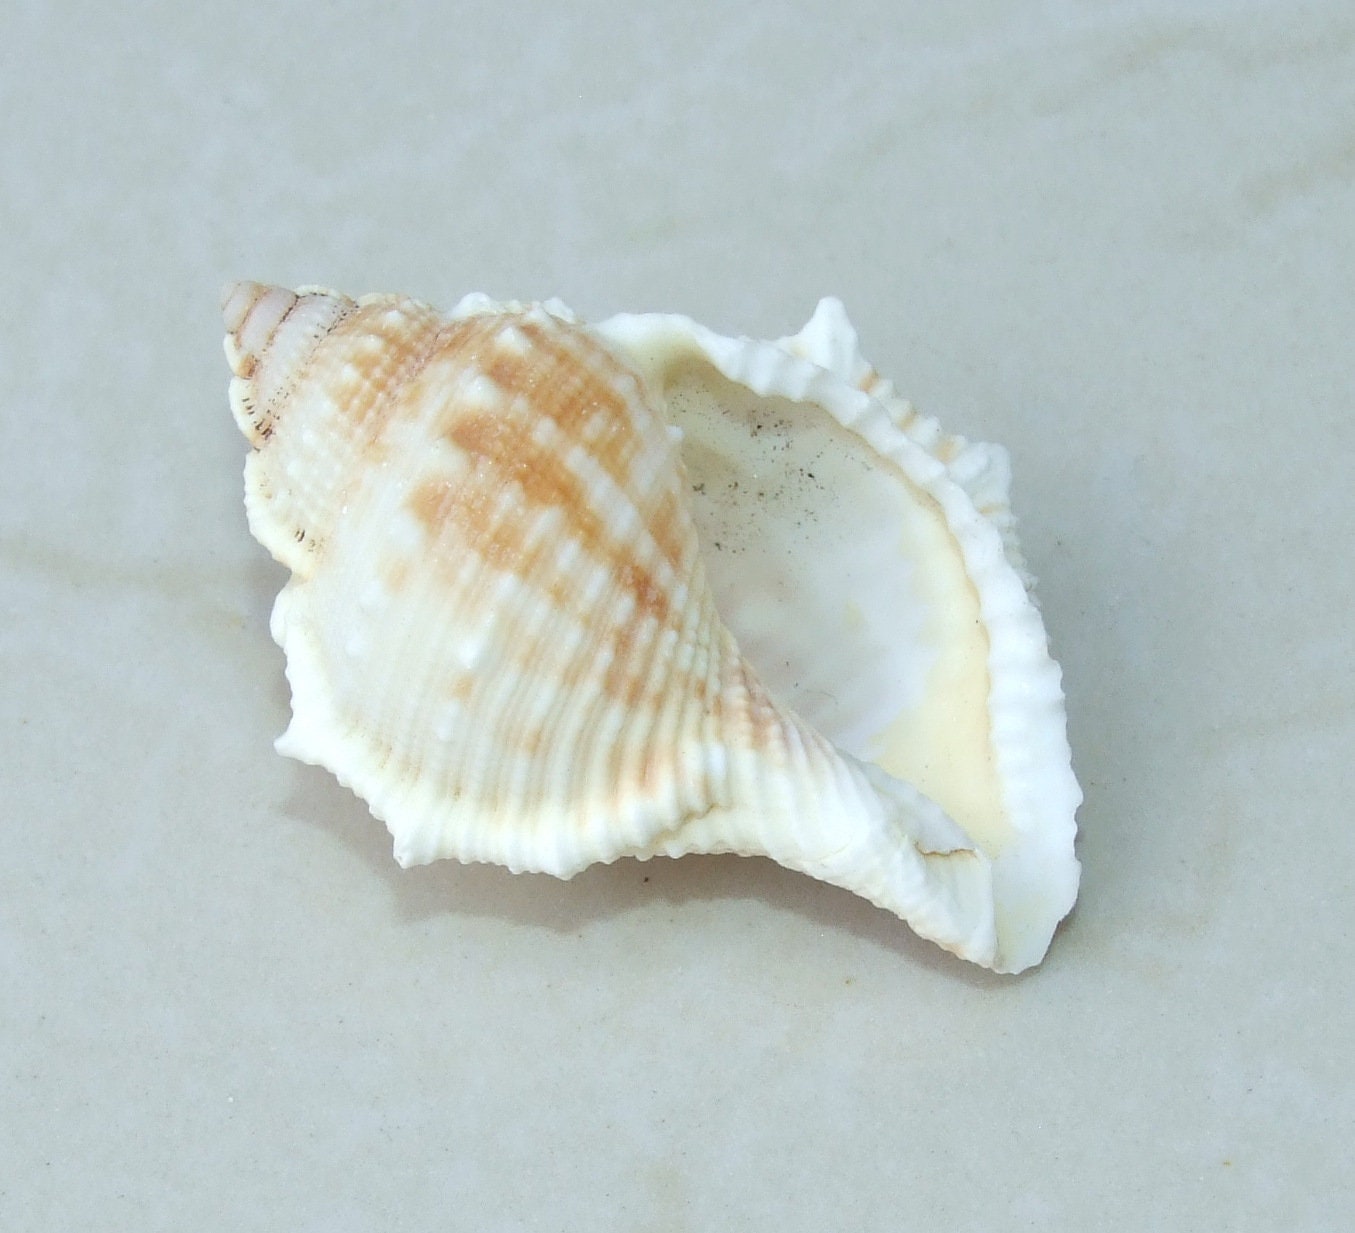 Large Natural Strombus Conch Sea Shell, Spiral Shell, Seashell, Shell, Beach Decor, Ocean Shell - 55-60mm, 4 Shells - 126-03